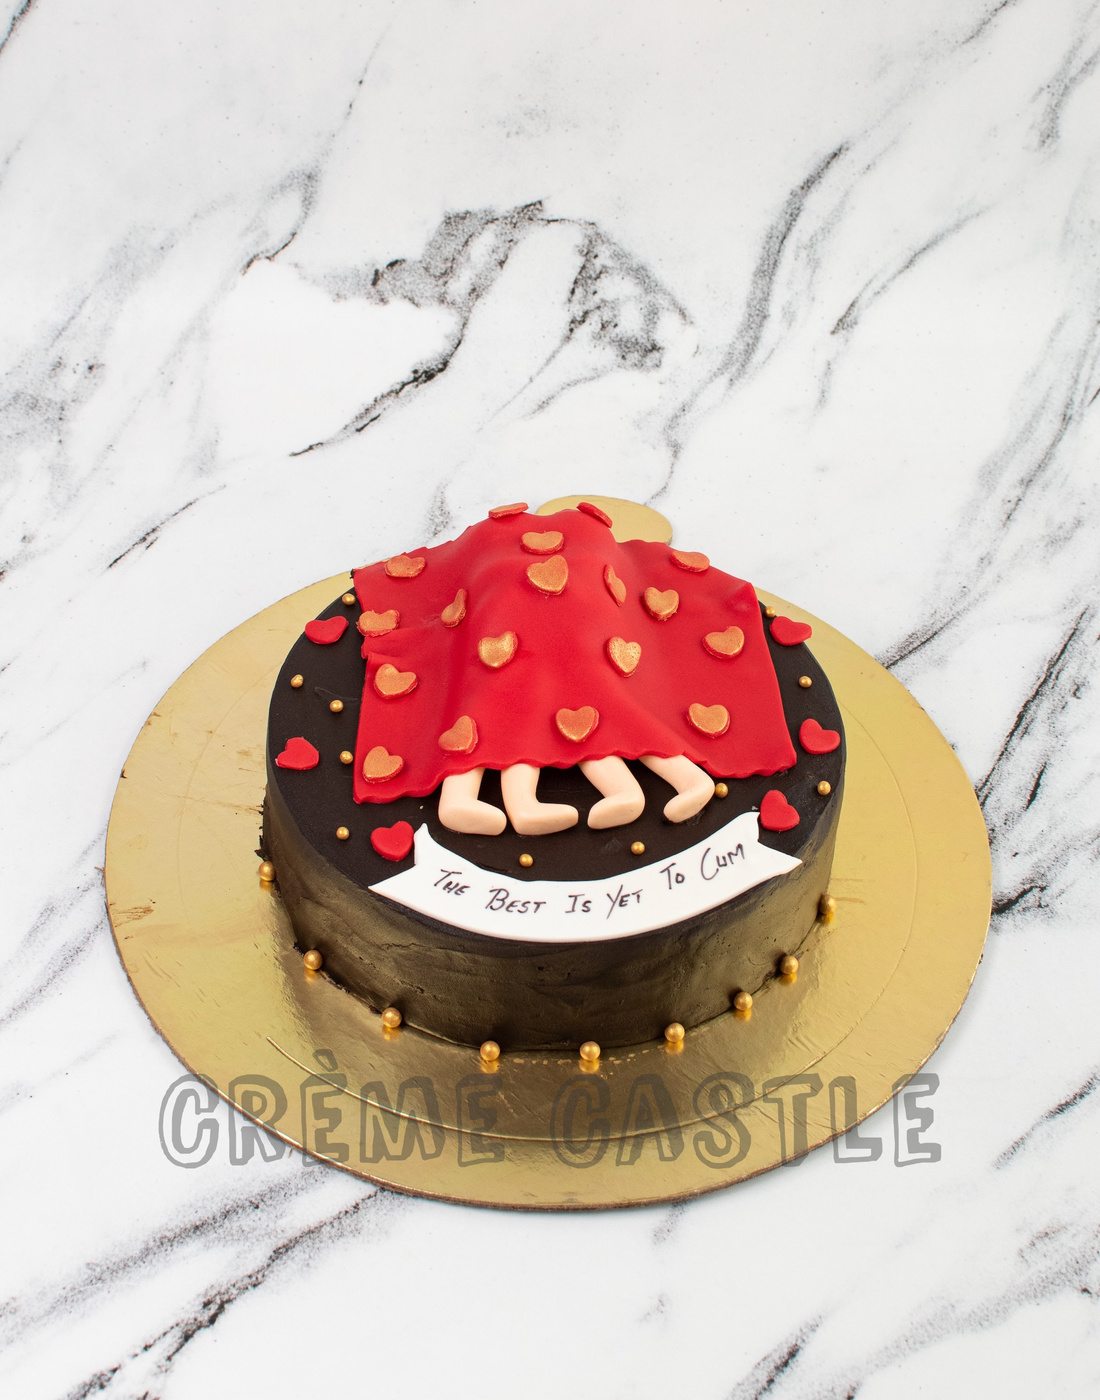 Buy/Send Happy Anniversary Cake Online @ Rs. 2599 - SendBestGift